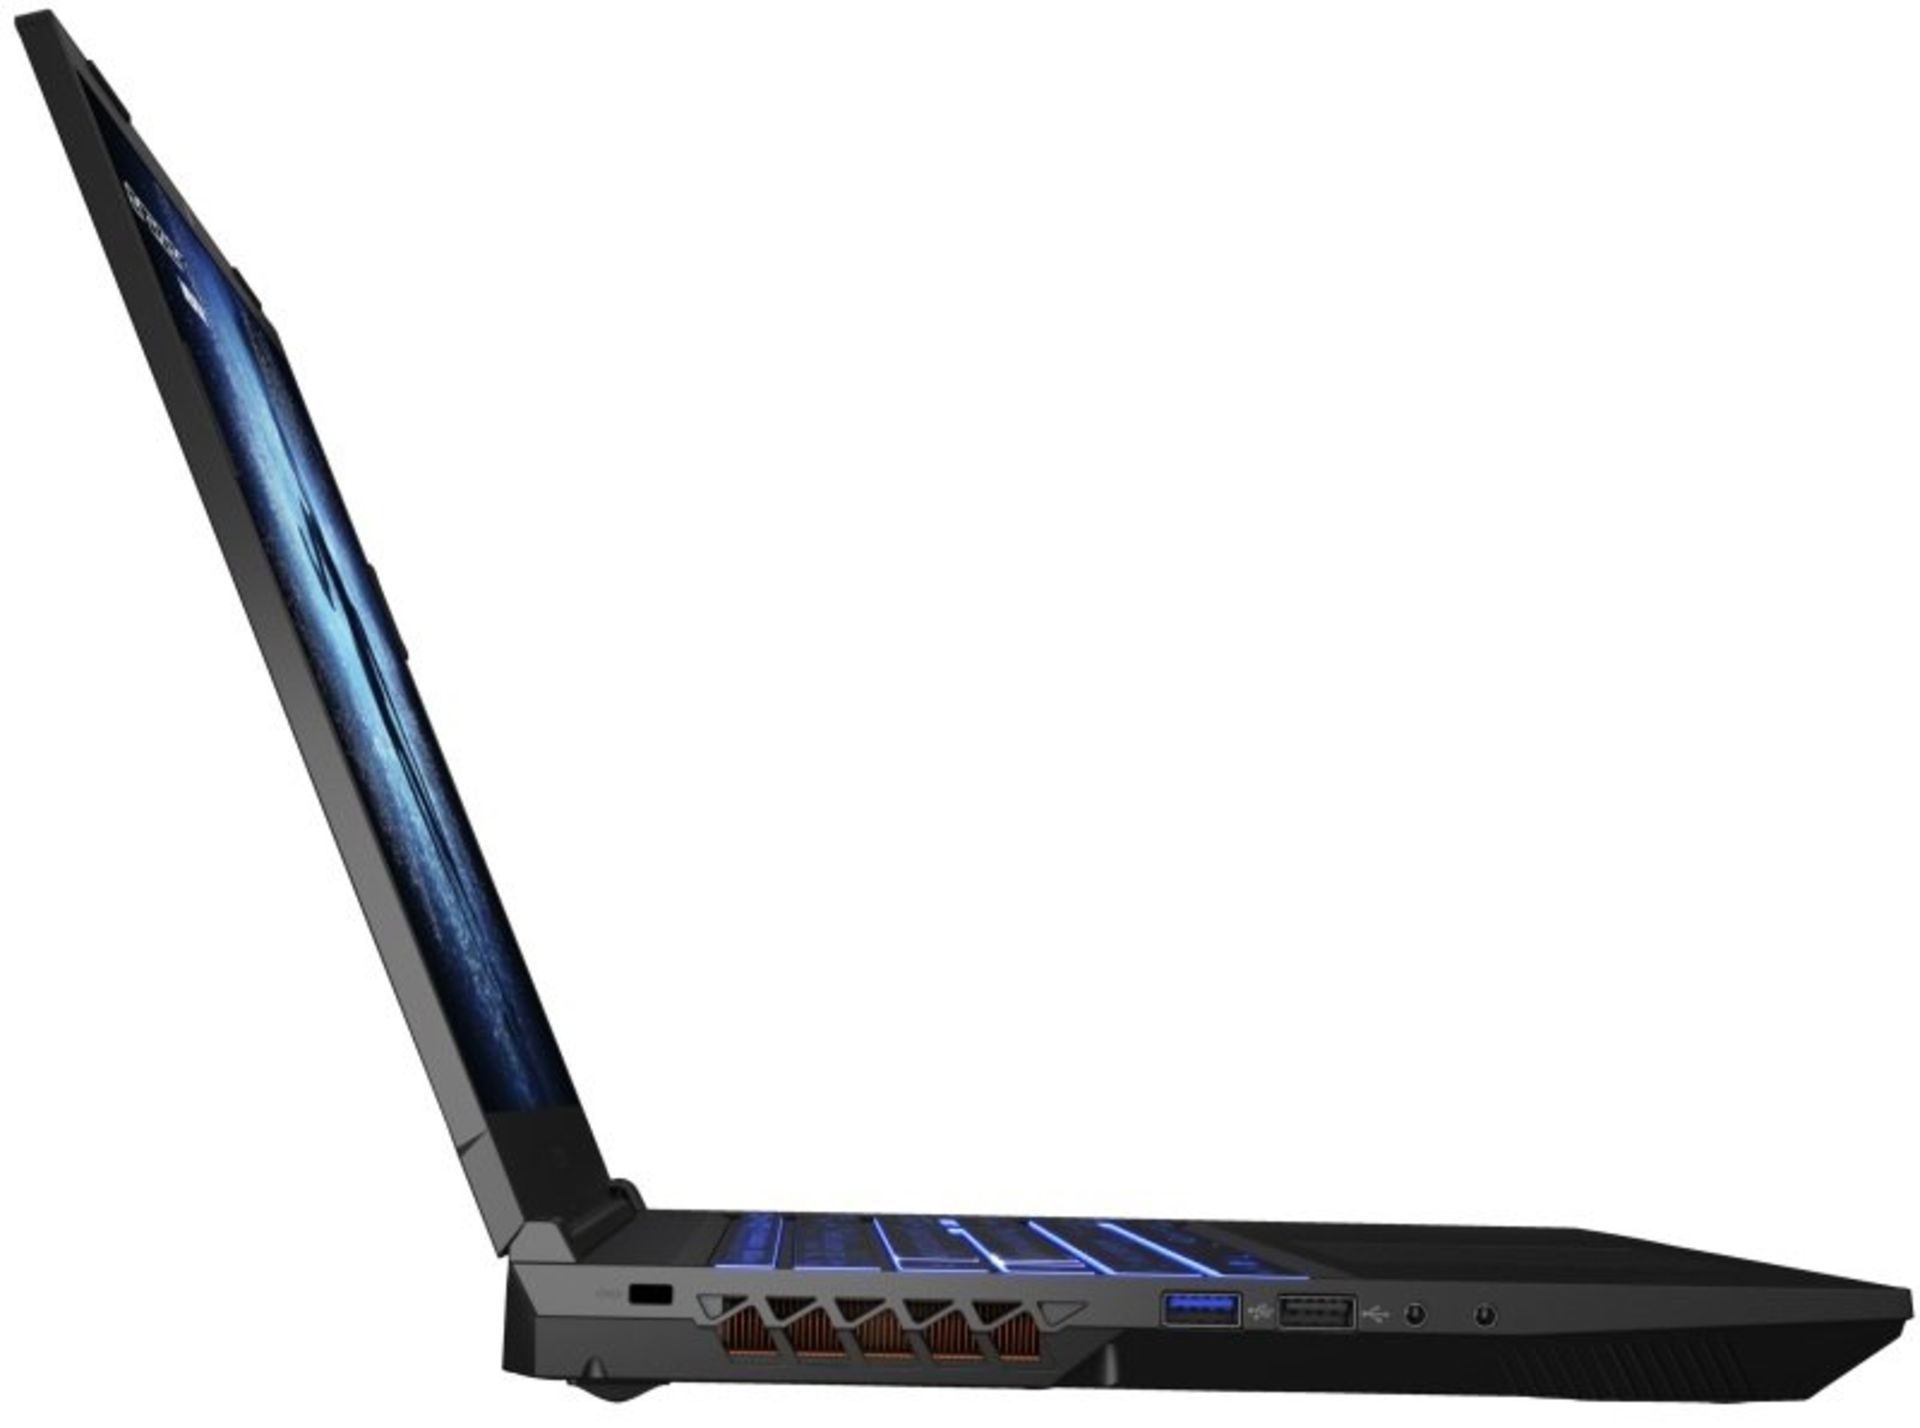 NEW & BOXED MEDION Erazer Deputy P40 - 62532 Gaming Laptop. RRP £1099. 15.6" 144hz FHD Screen, Intel - Image 5 of 6